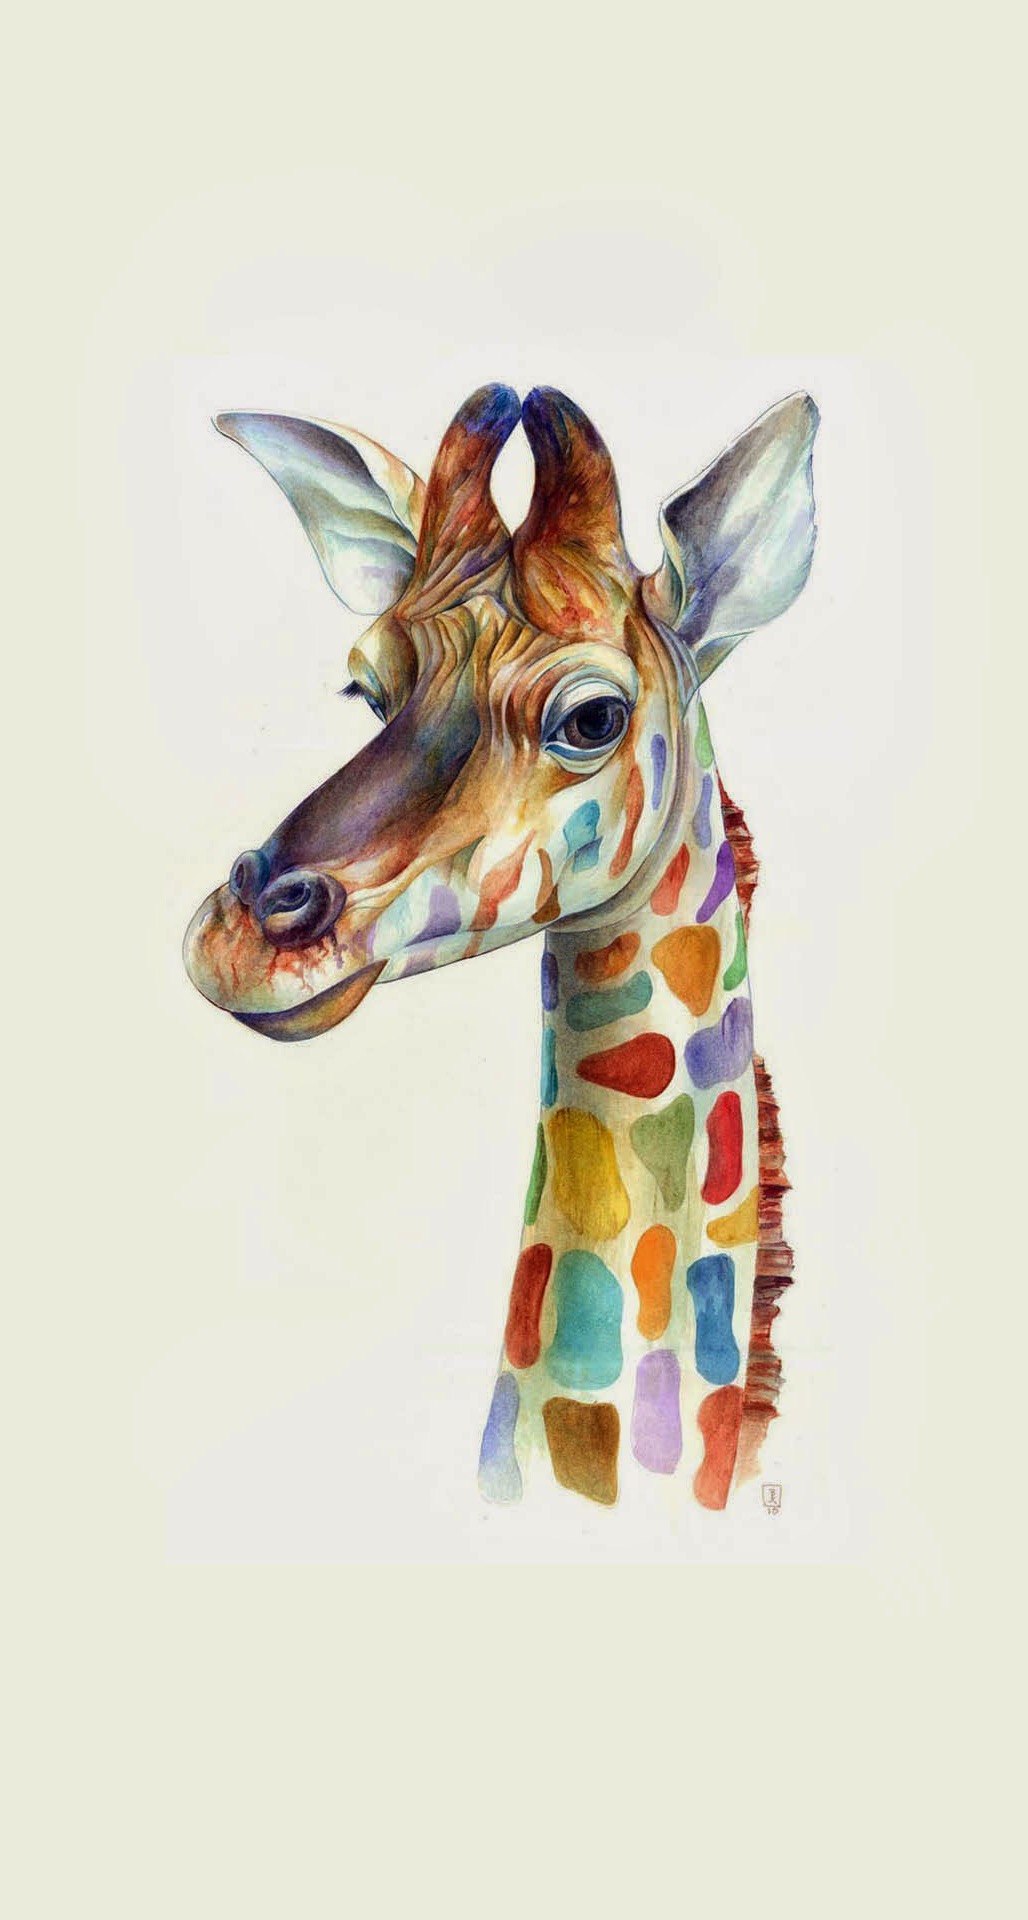 Friendly-Giraffe-Colorful-iPhone-6-Plus-HD-Wallpaper.